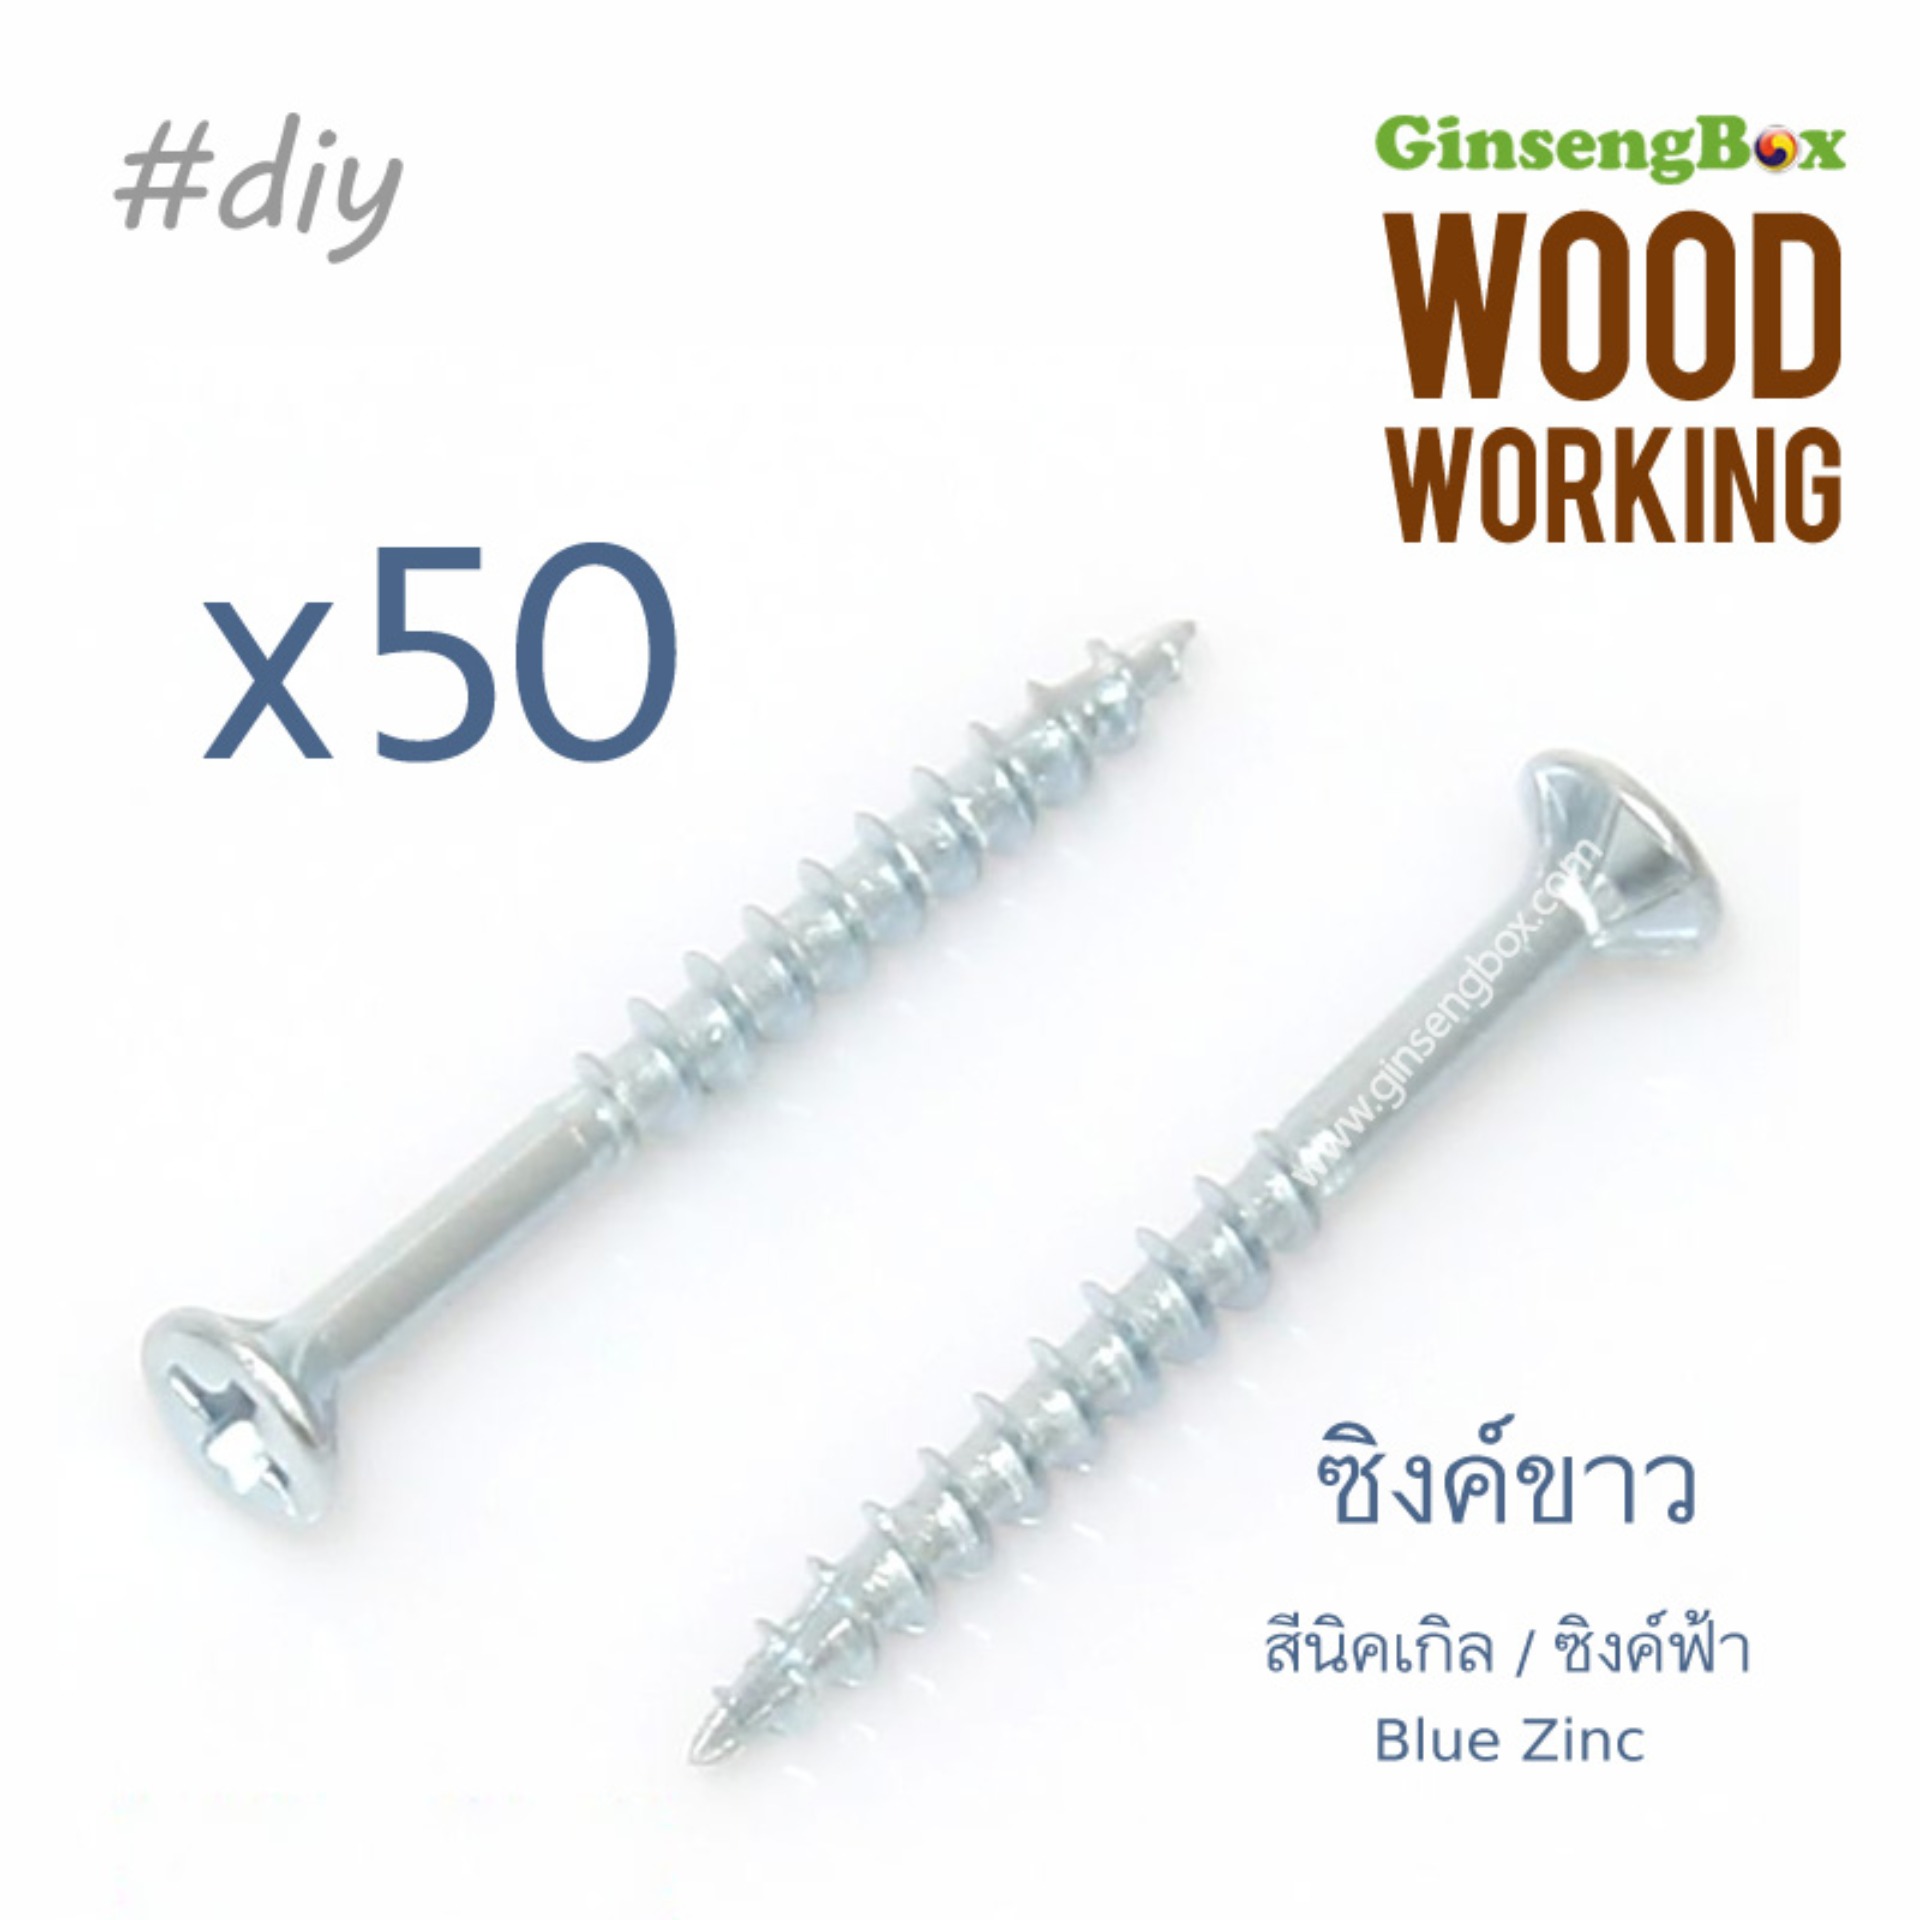 Woodworking screw 3.3x35mm flat headed, Self-drilling screws, Phillips screws